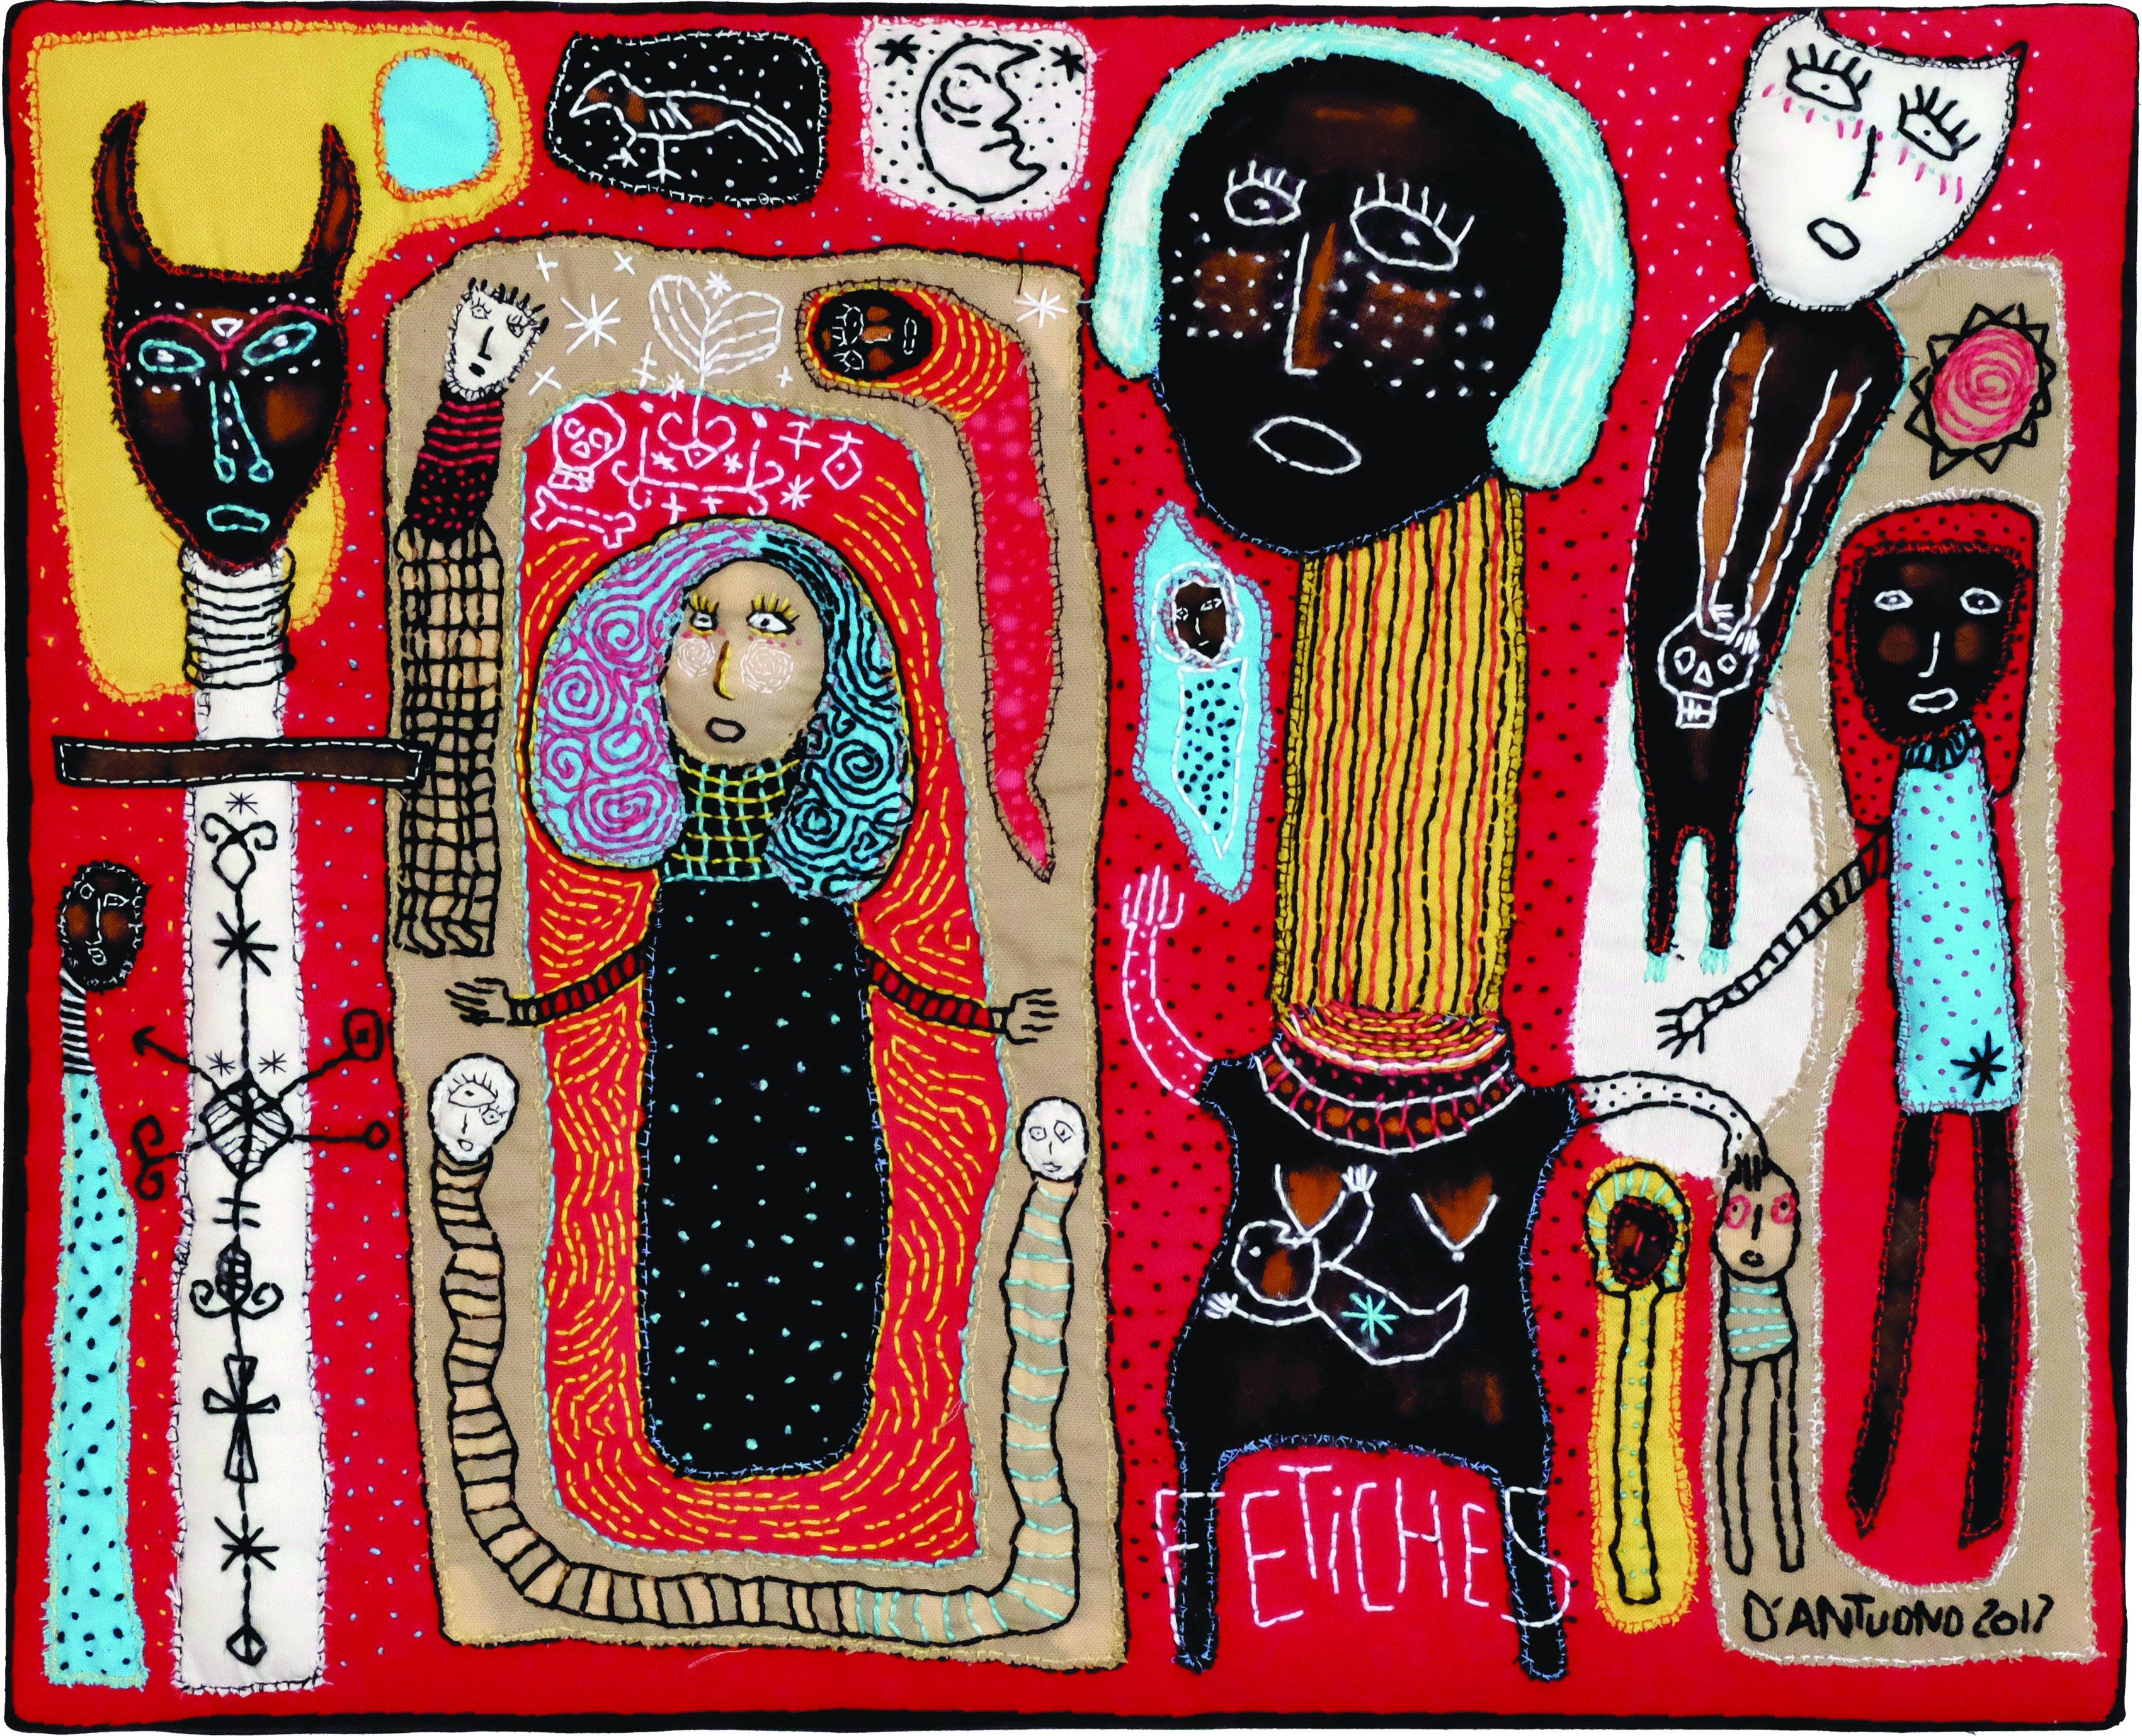 Fetishes, Barbara d'Antuono, art textile contemporain du XXIe siècle